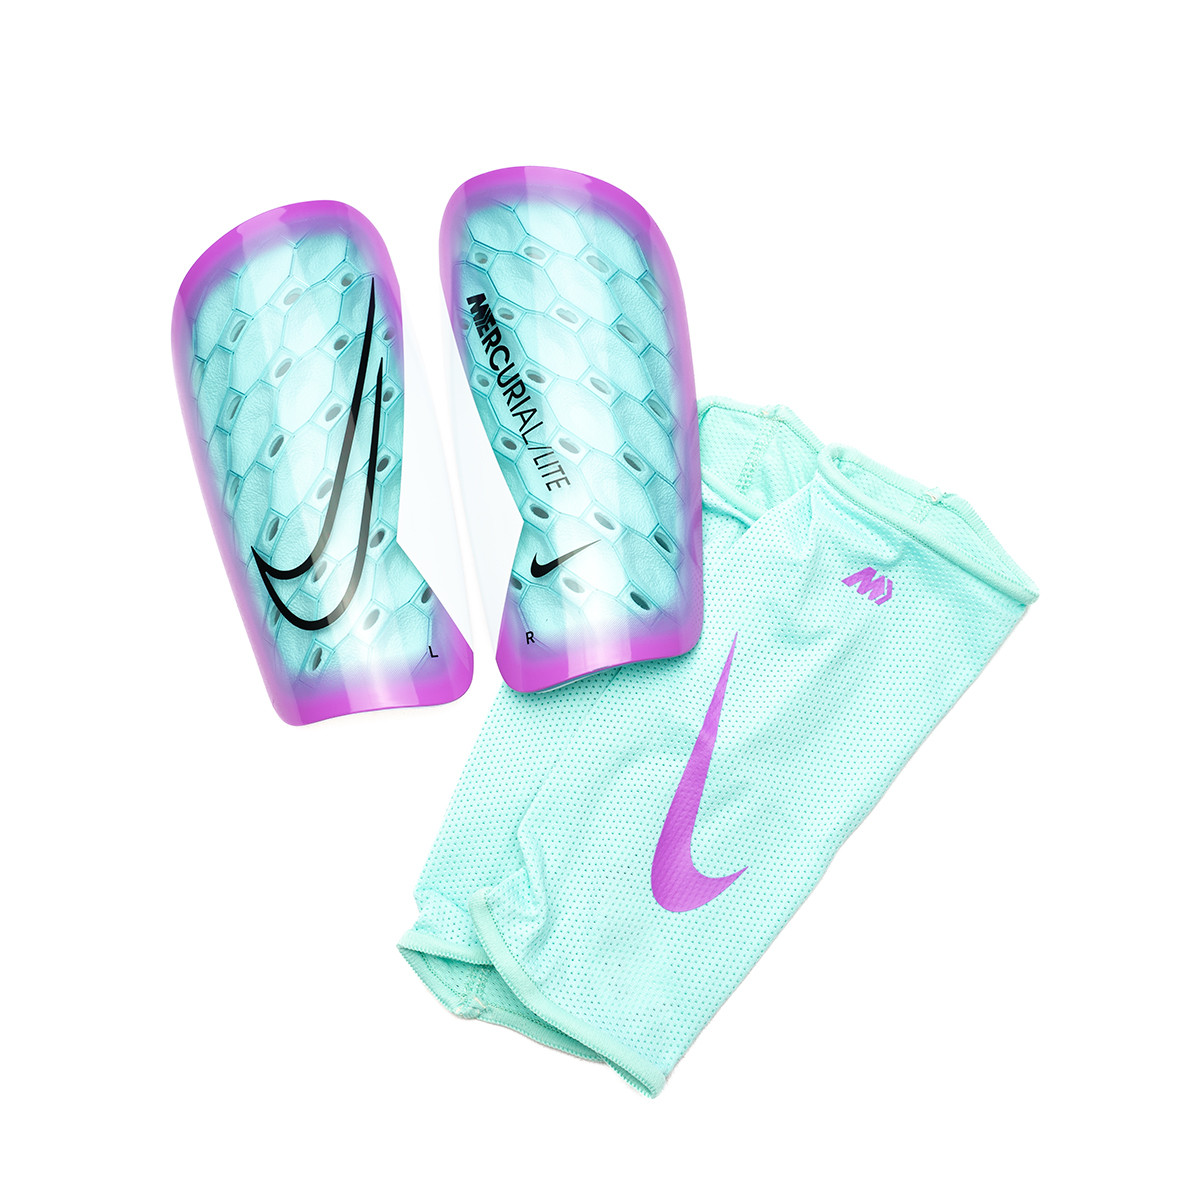 Protège-tibias Nike Mercurial Lite - Taille XL